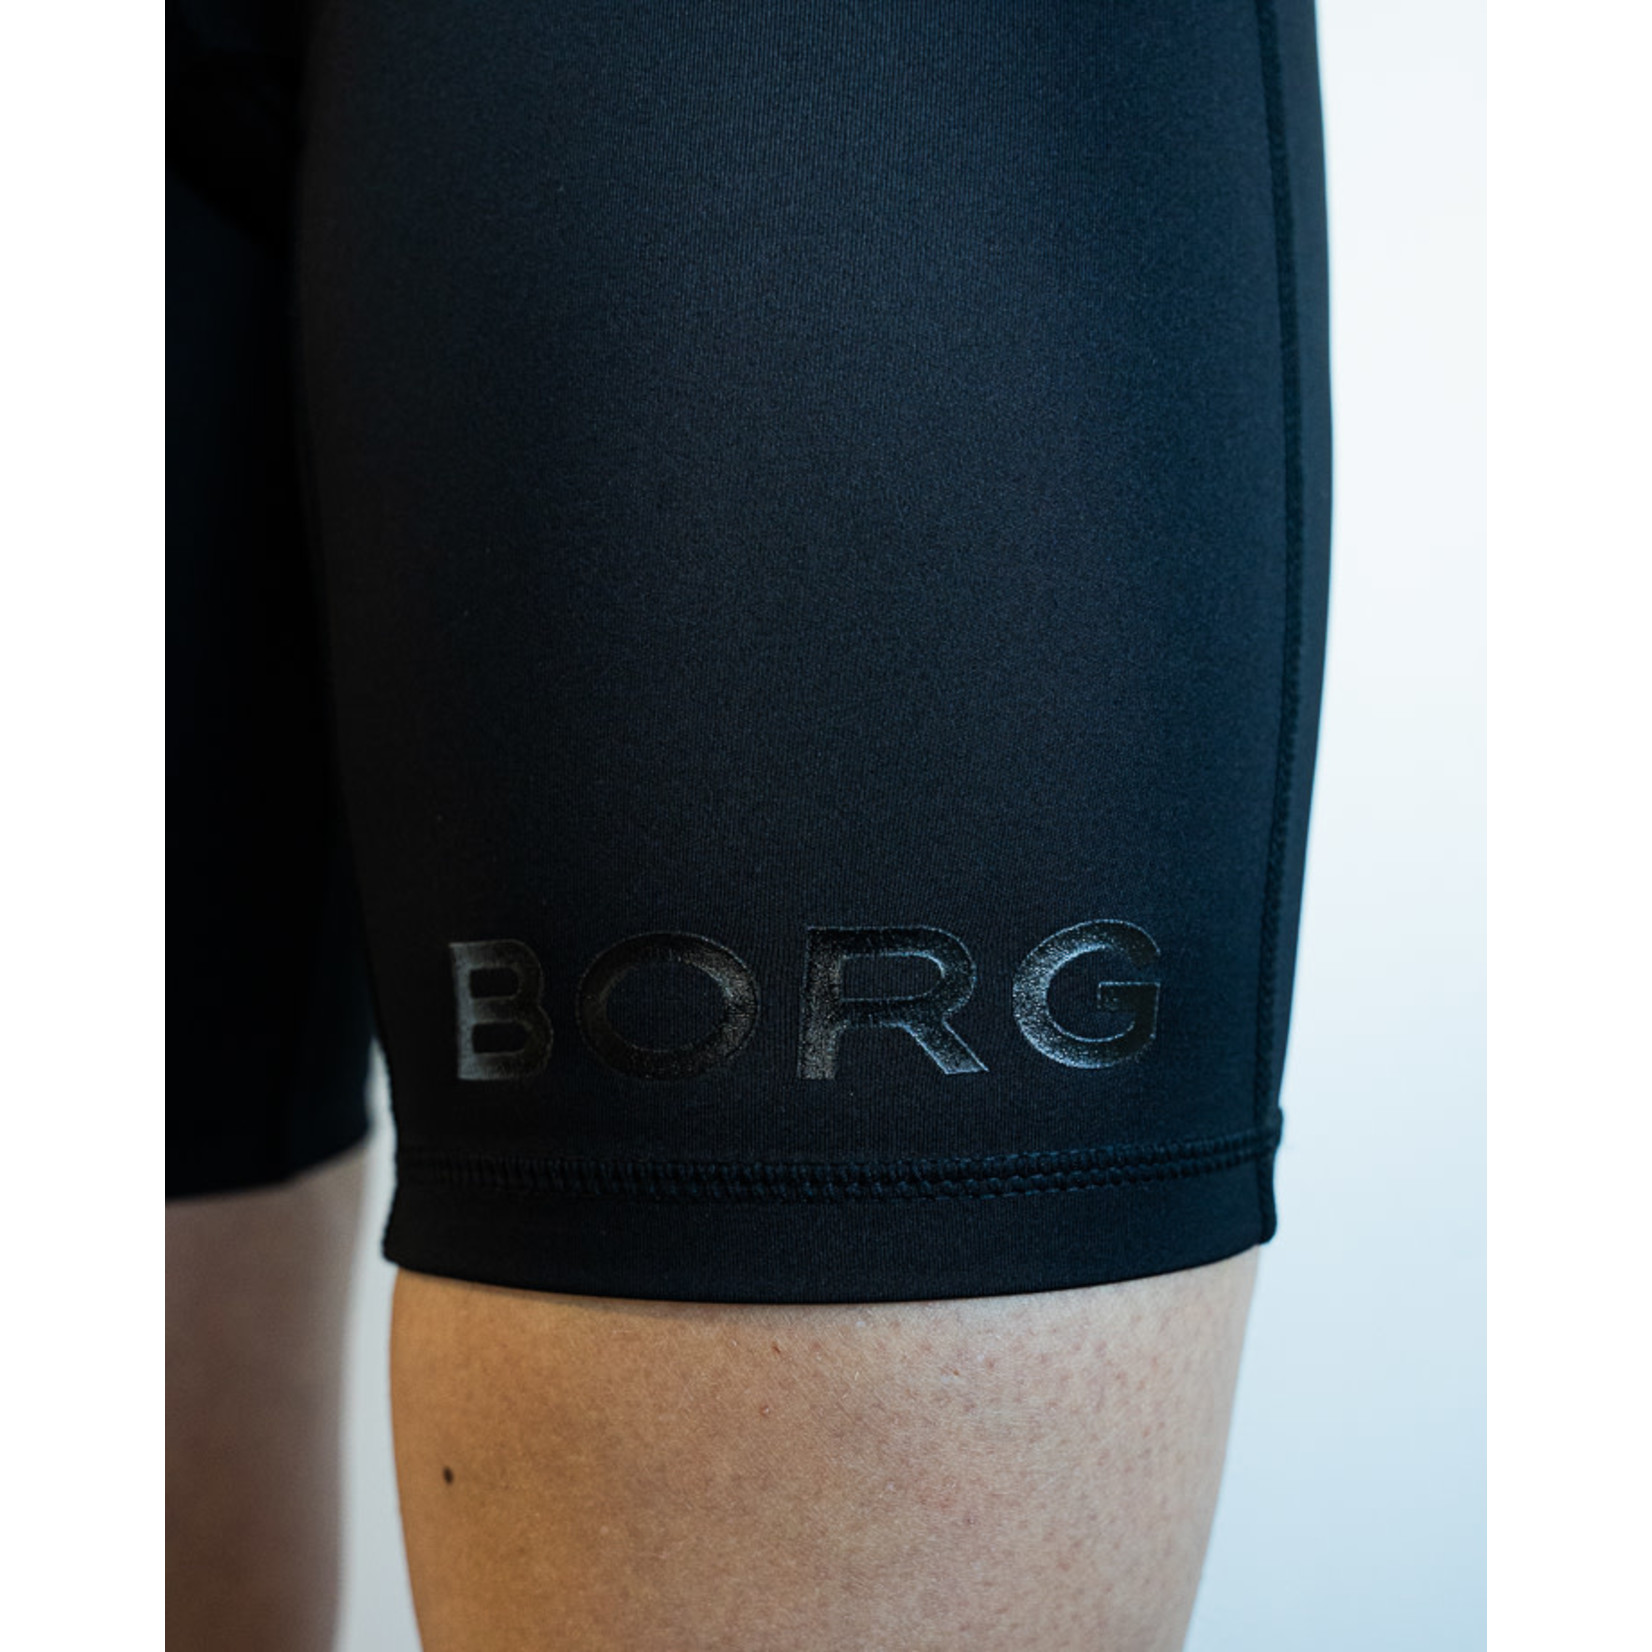 Björn Borg FYT Tight Shorts